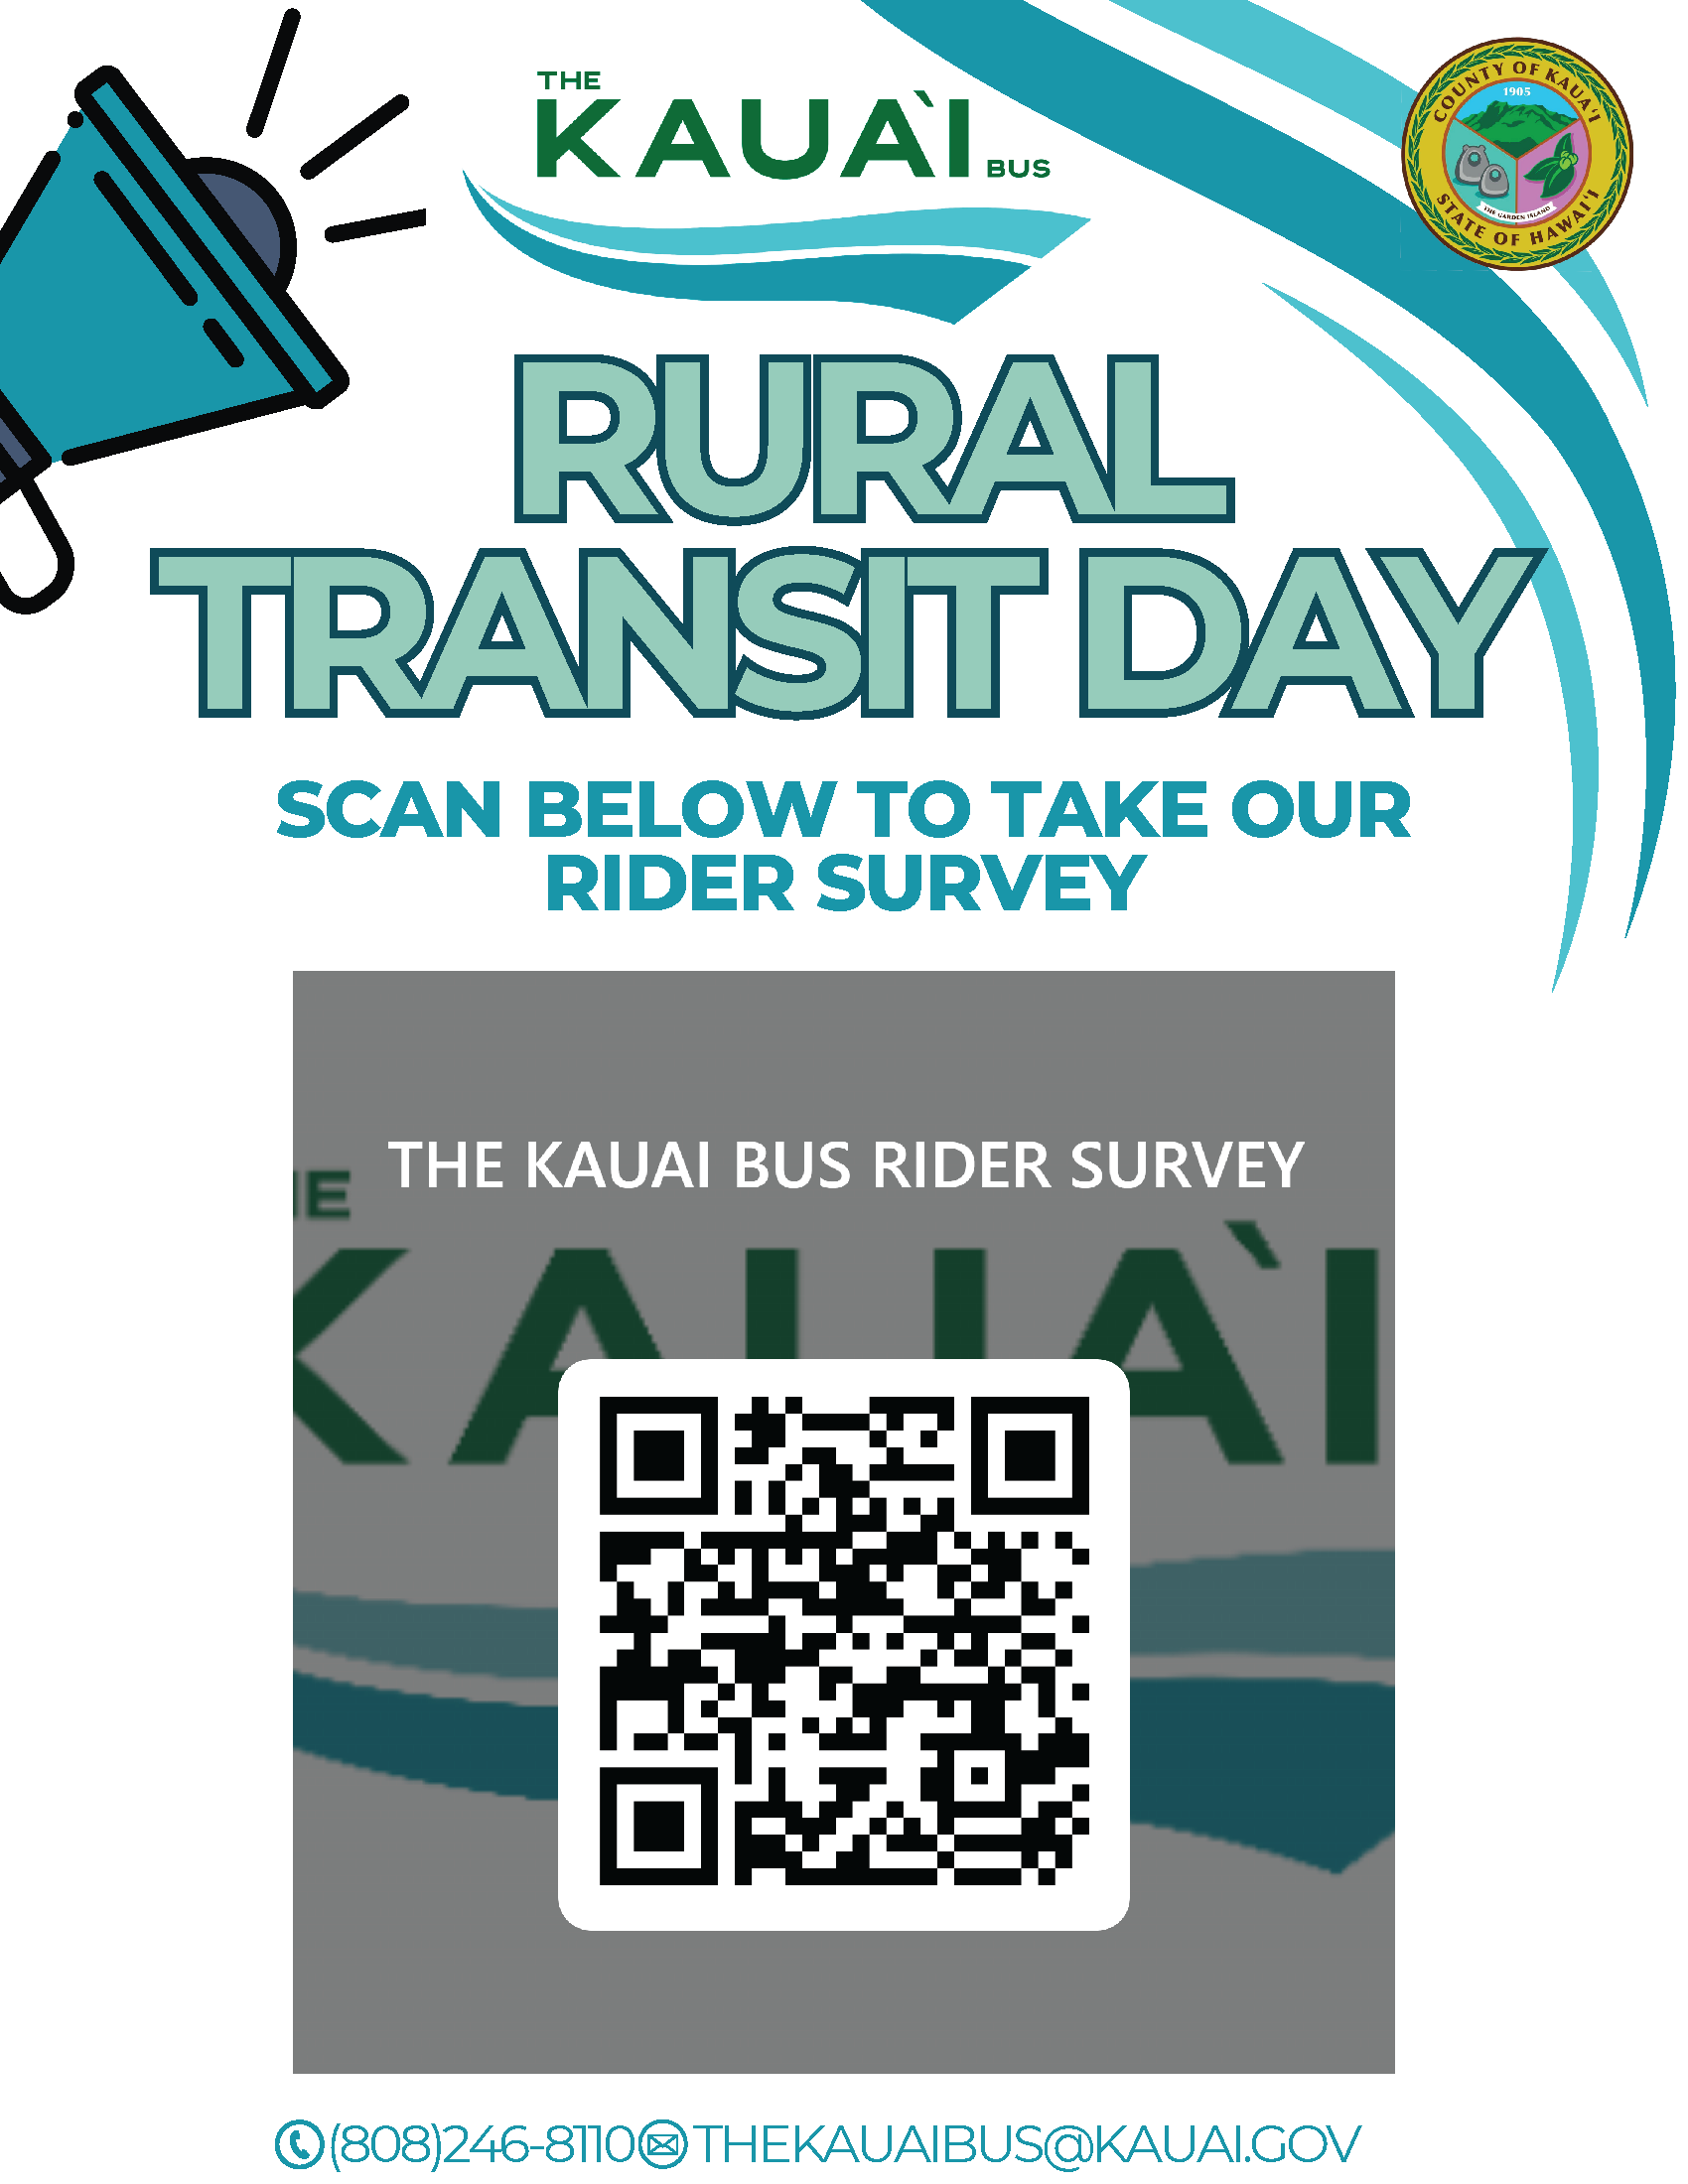 scan the QR code to take the Kauai bus rider survey